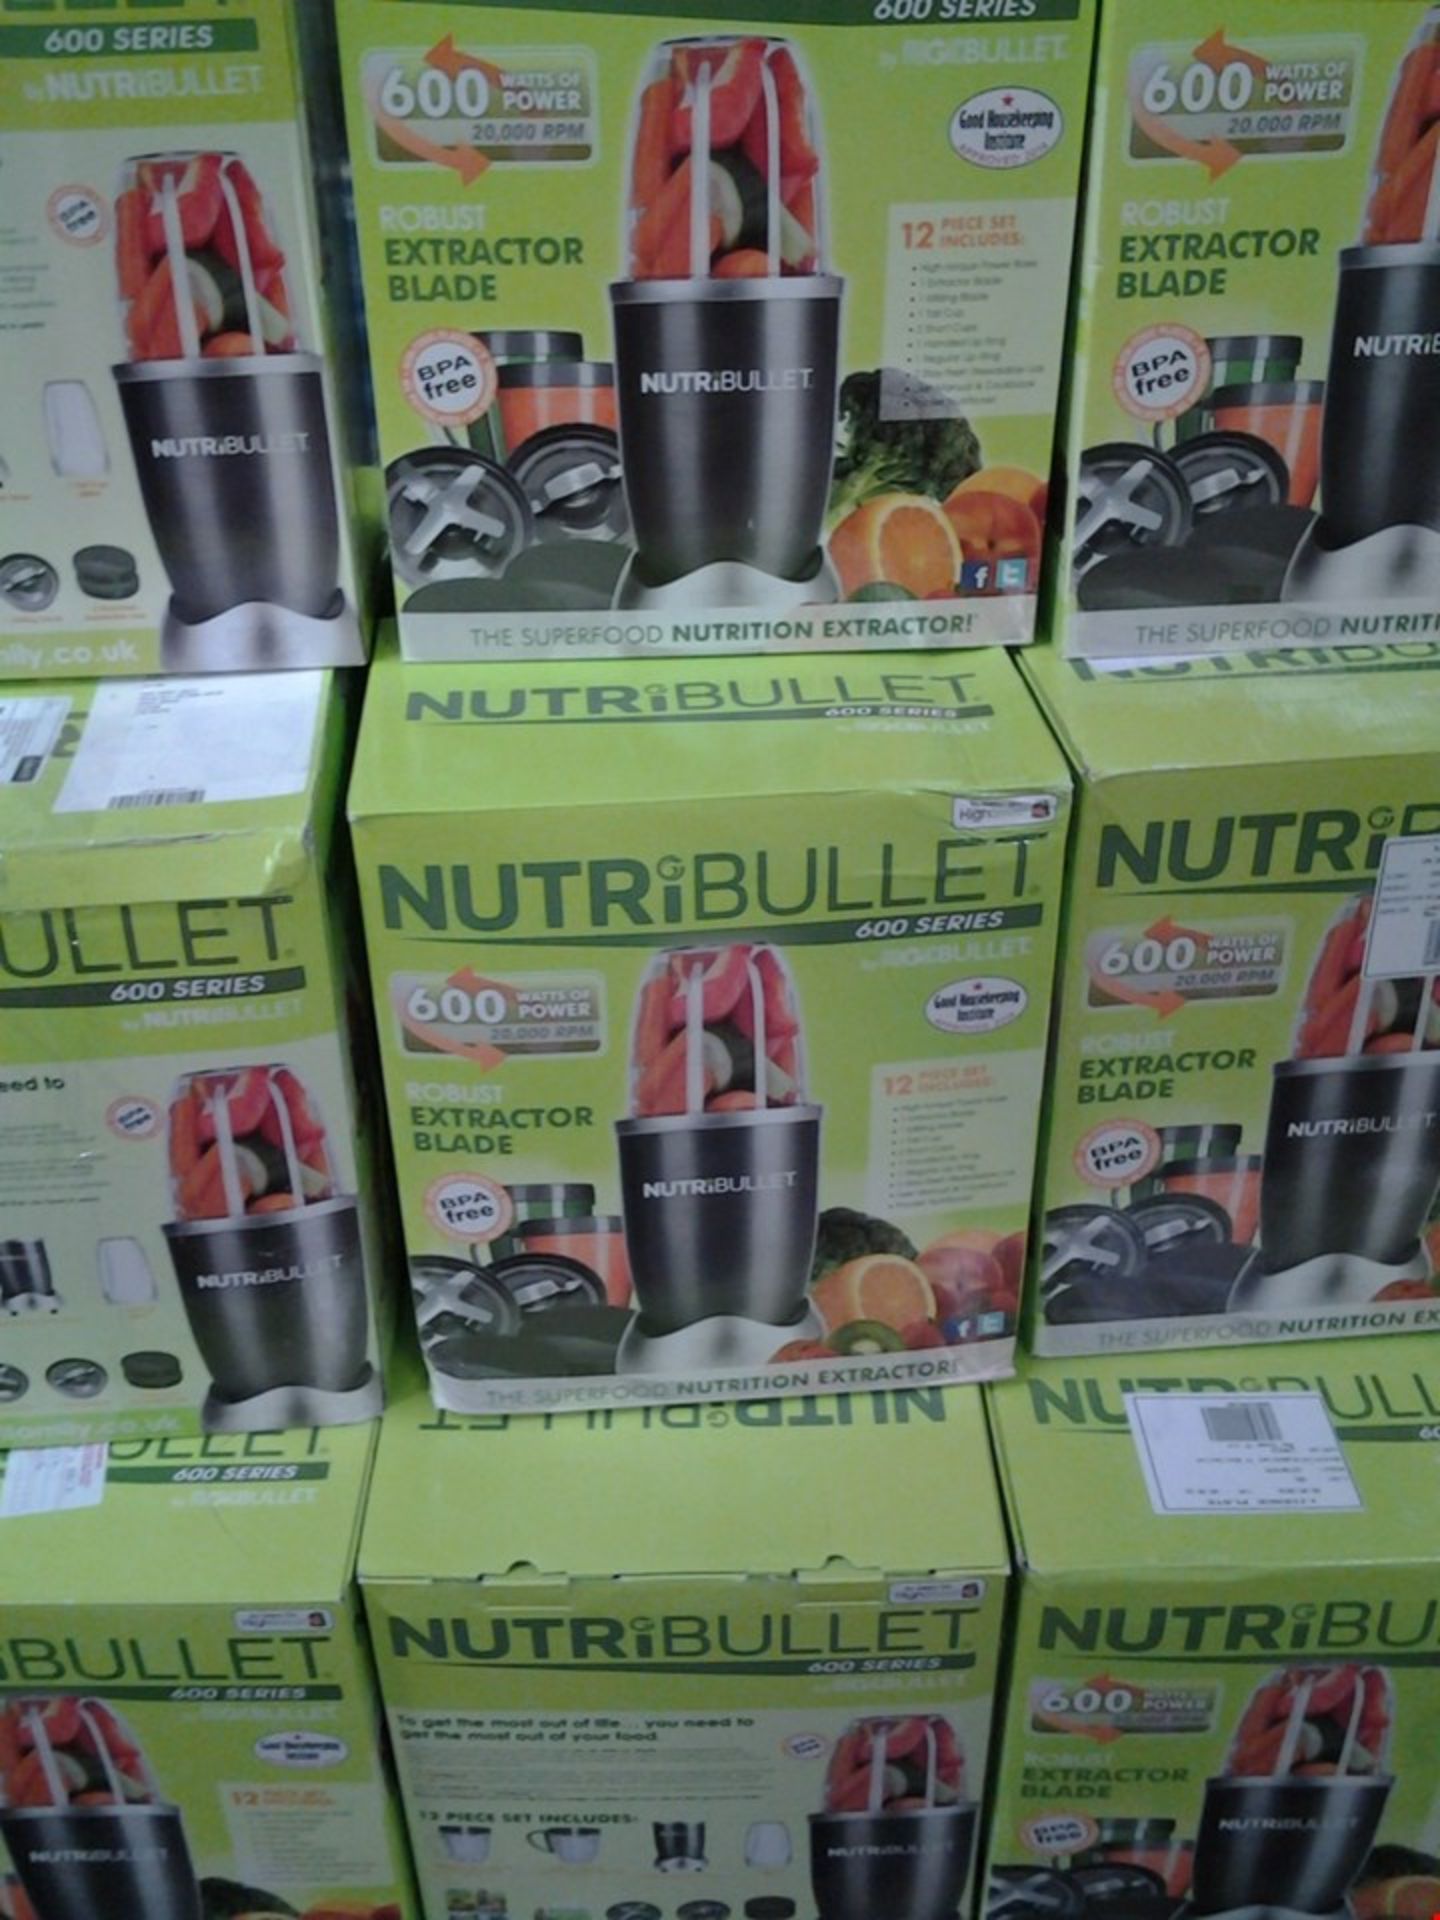 6 BOXED NUTRIBULLET NUTRITION EXTRACTORS WITH 600WATT MOTOR